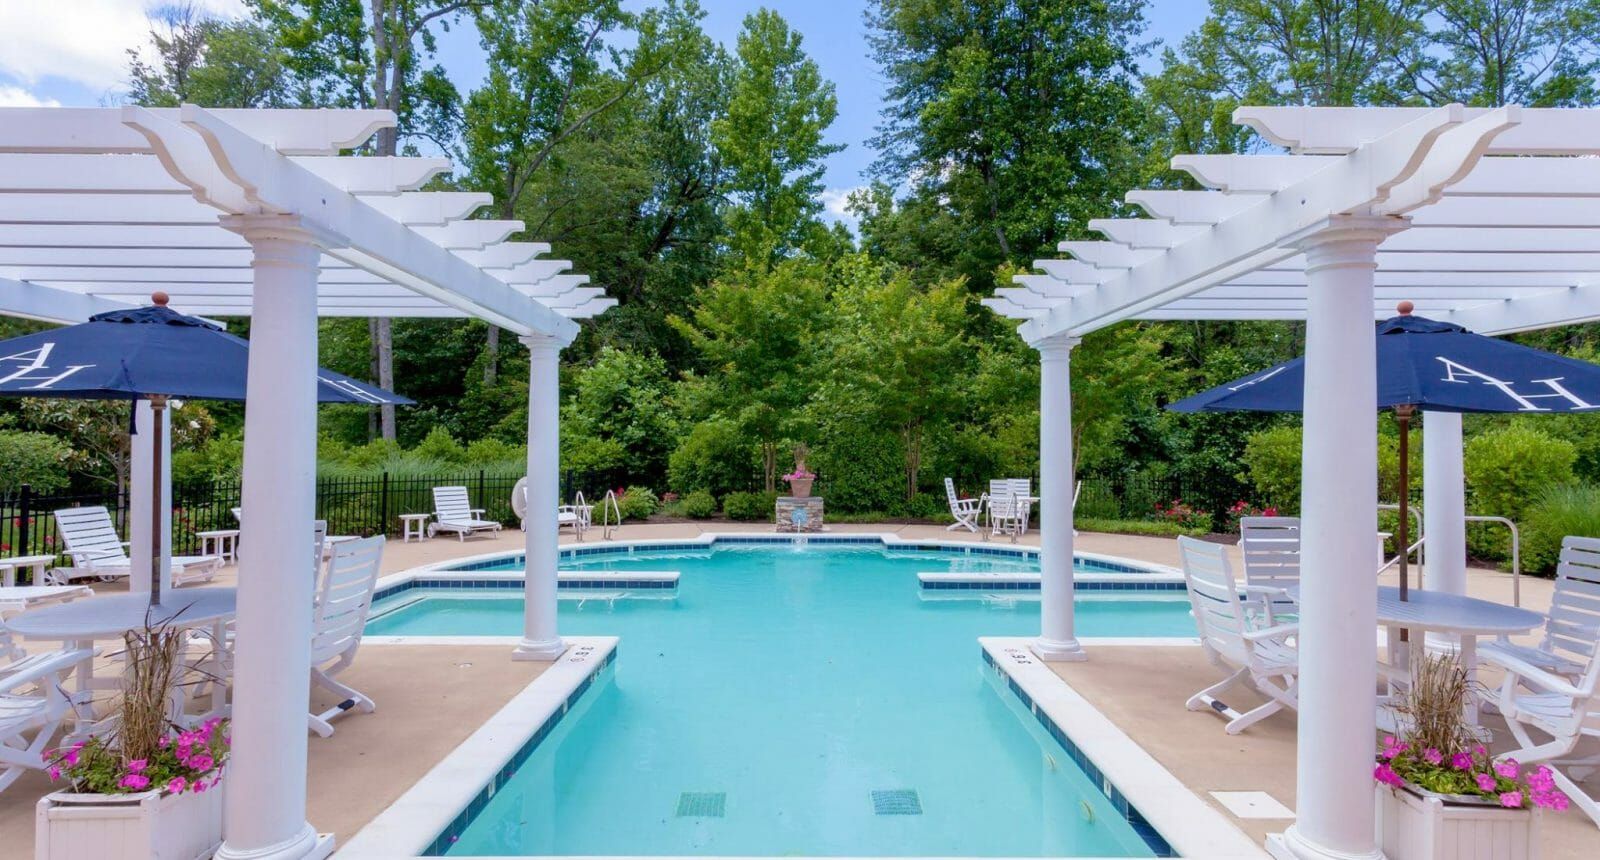 Pool and trellises at Alexander Heights Senior Apartments in Fredericksburg, VA